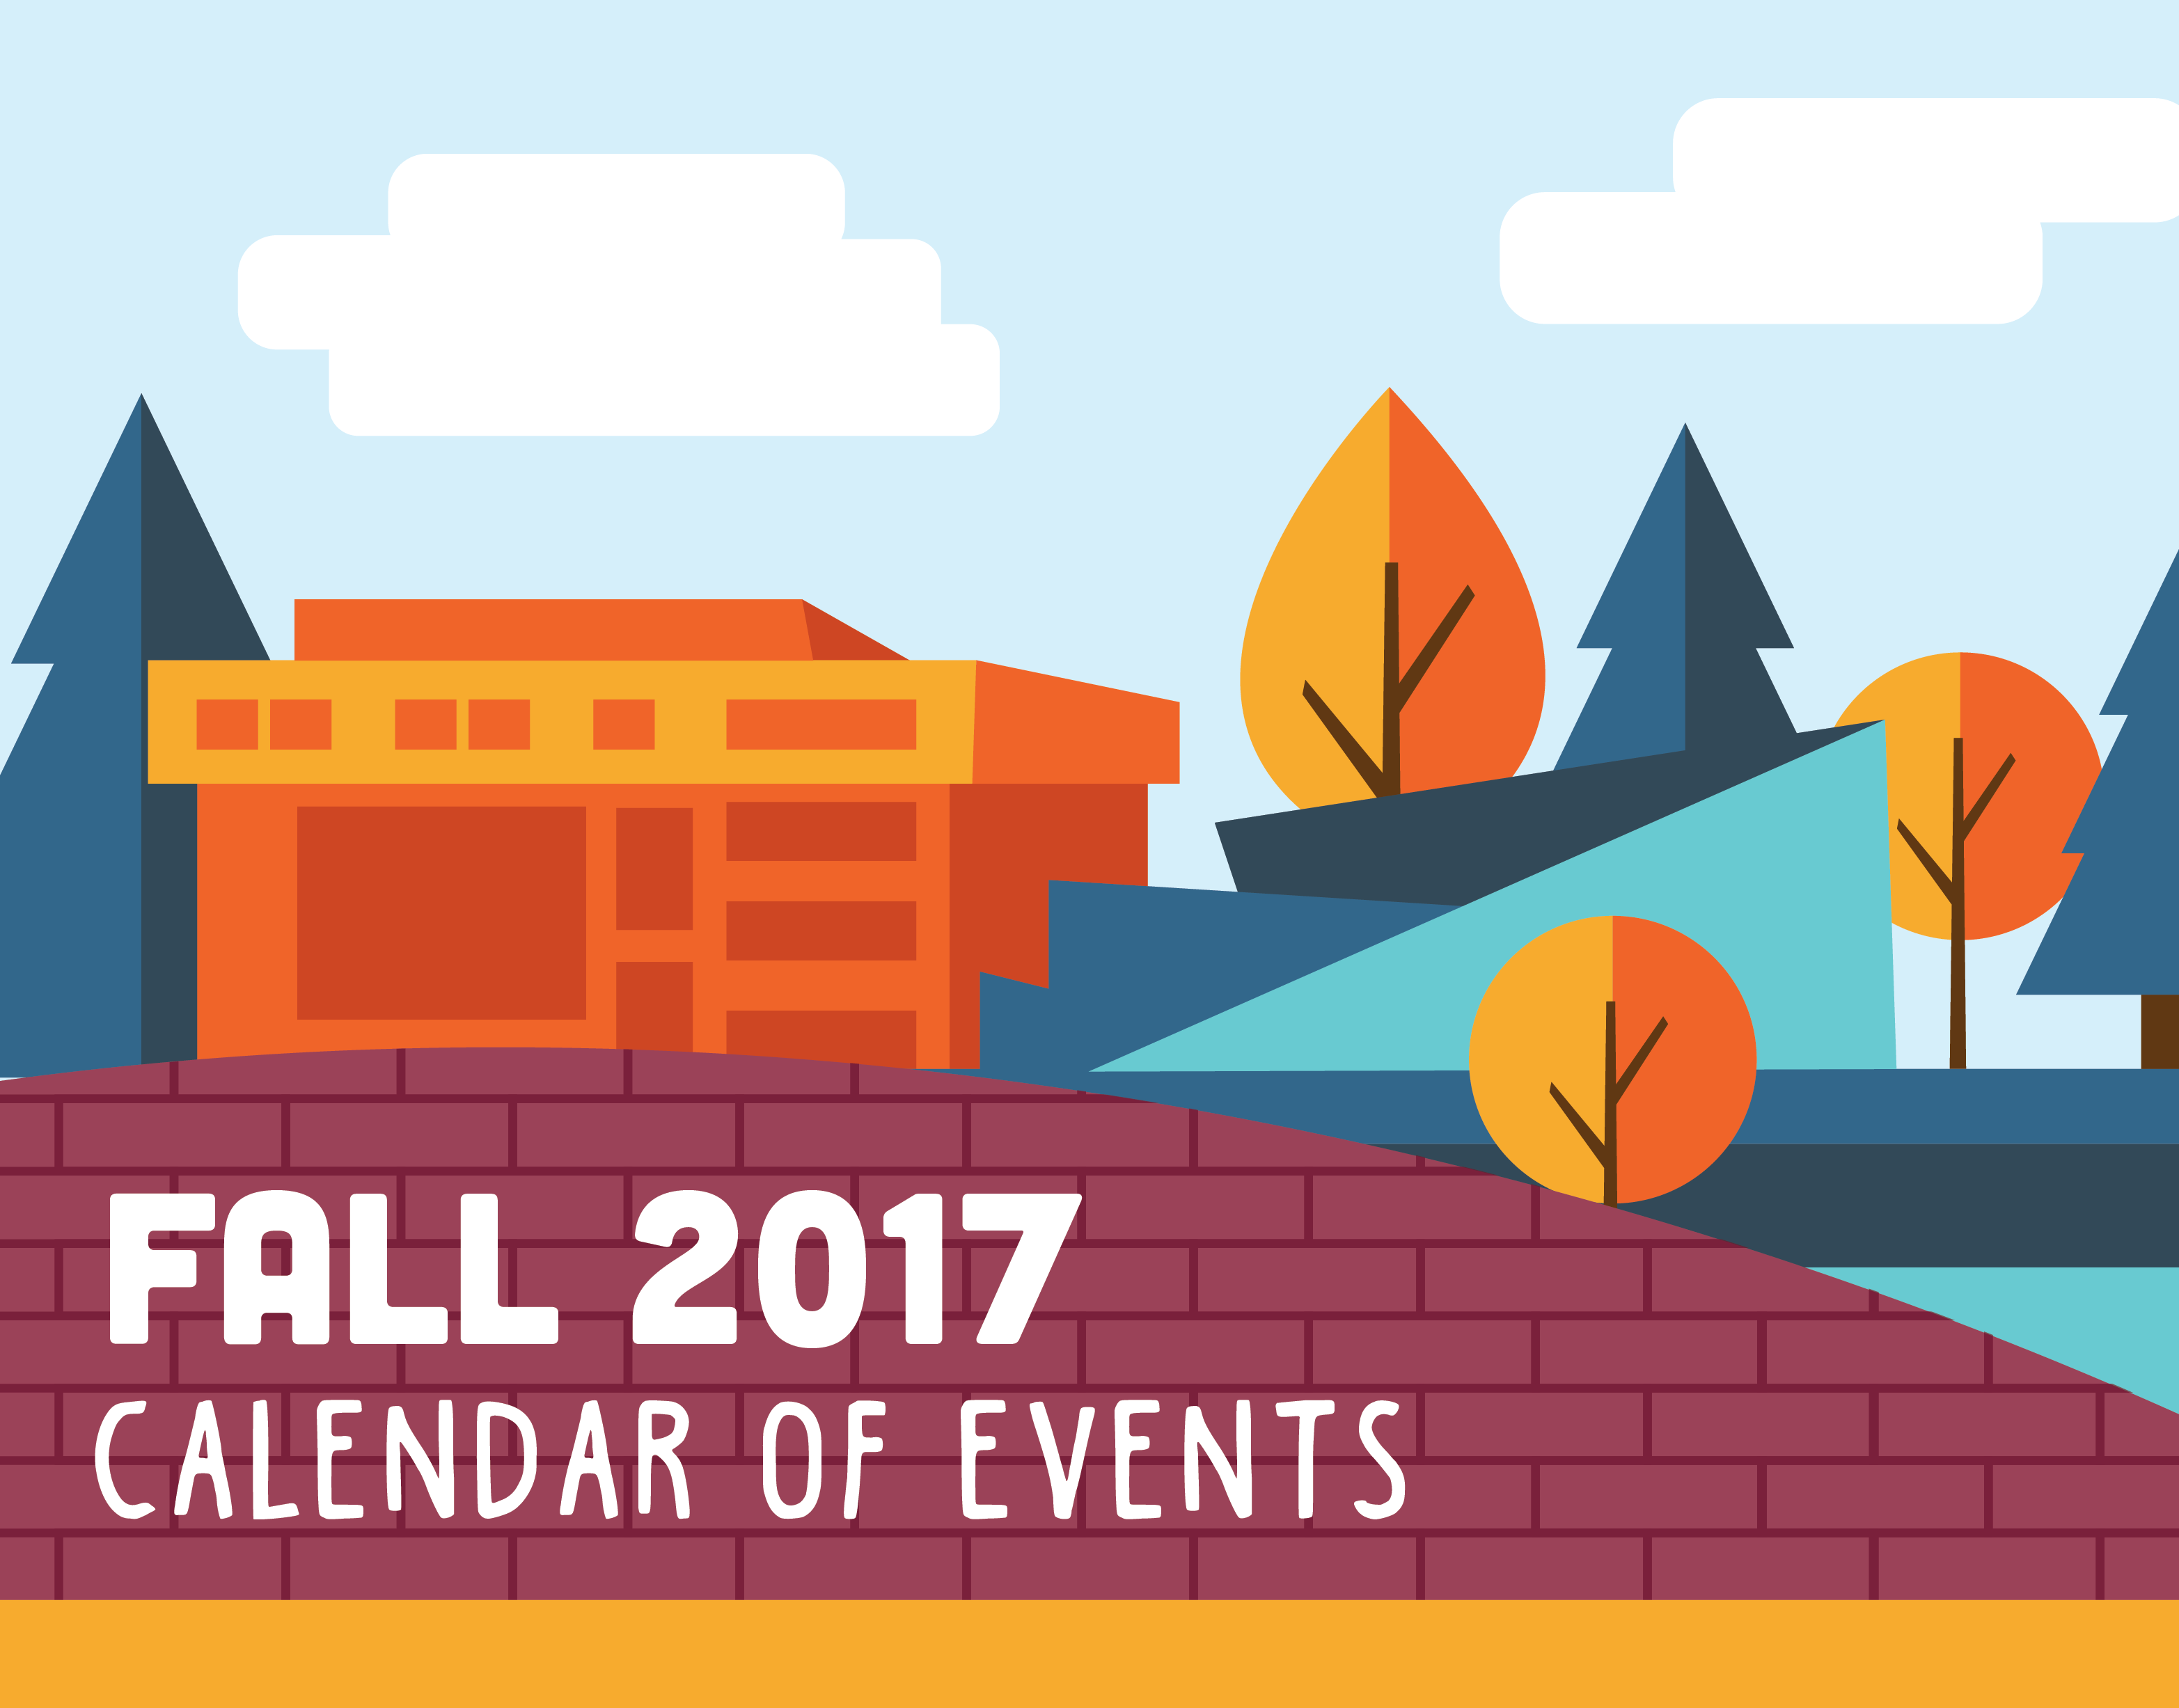 Marissa Carroll SUNY New Paltz Calendar of Events Fall 2017